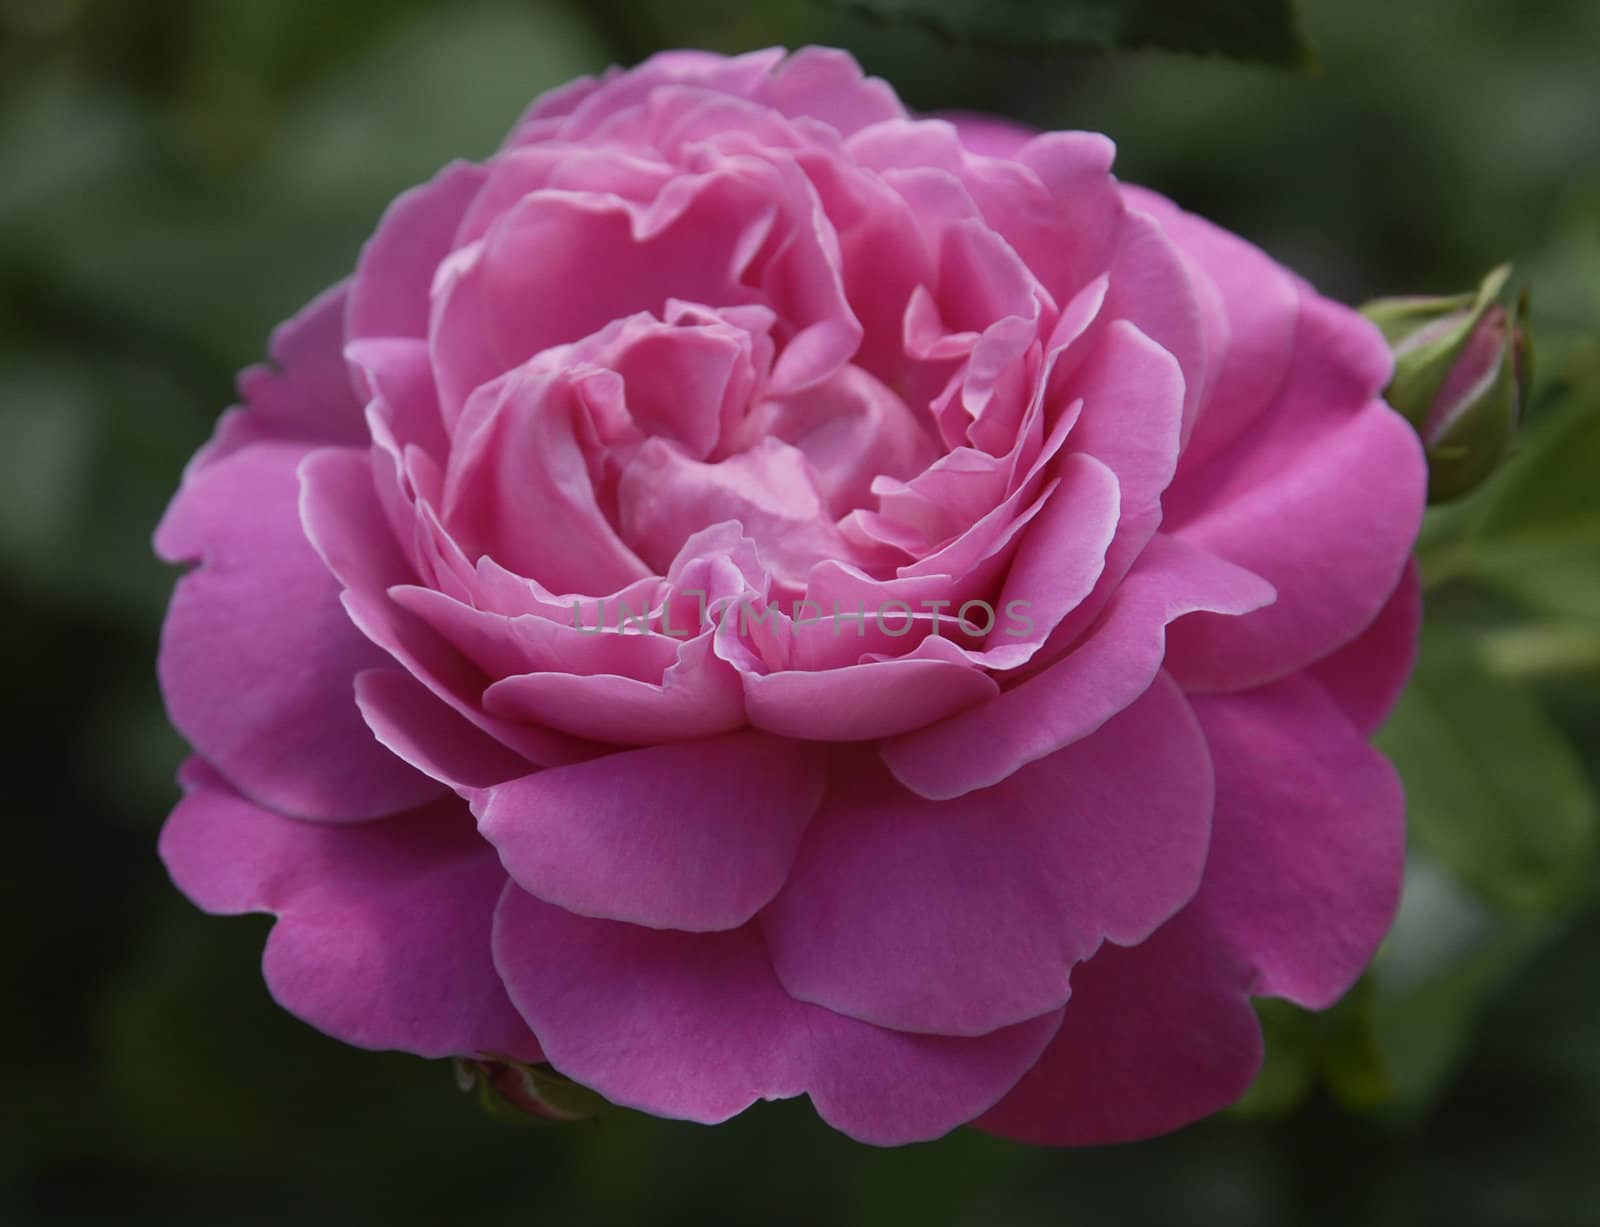 Rose-Pink 'Mary Rose' rose flower